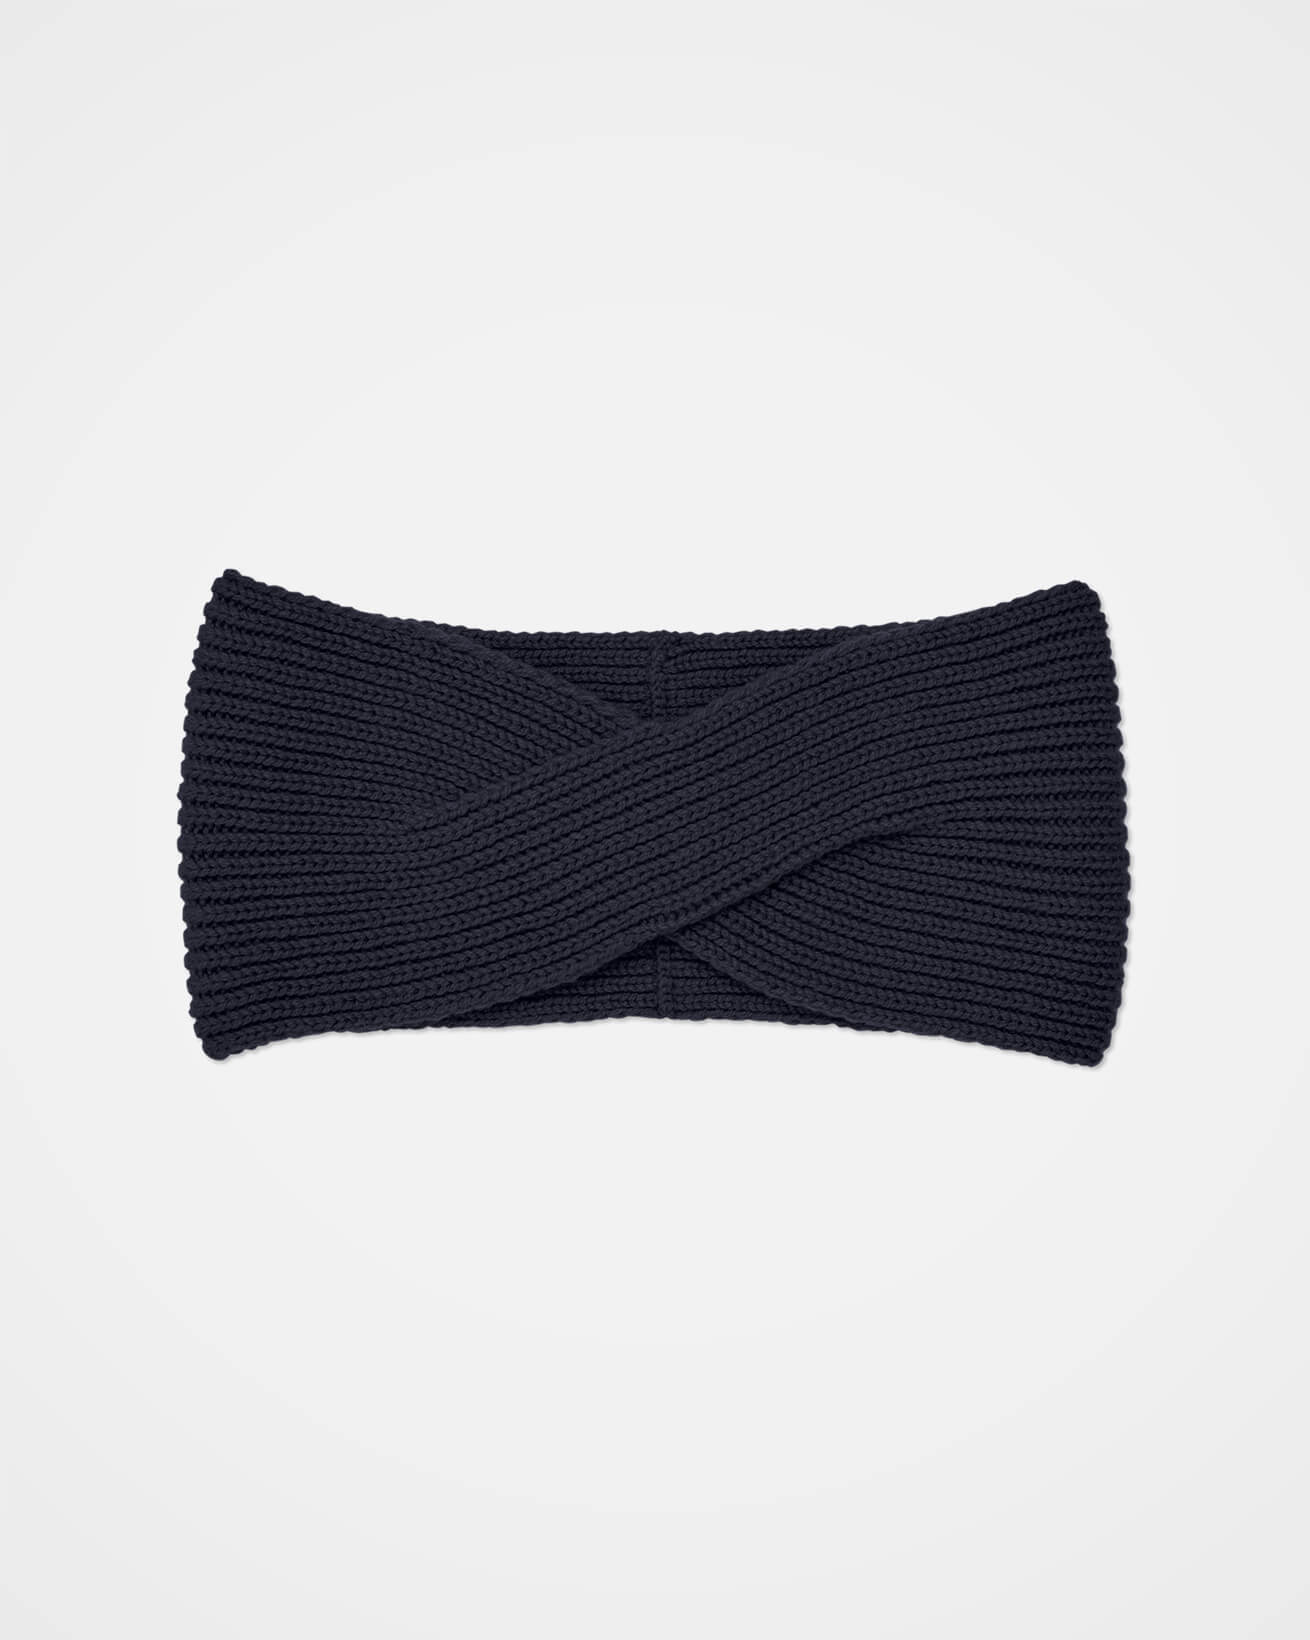 7879_cashmere-headband_dark-navy_2_cutout_web_v2.jpg